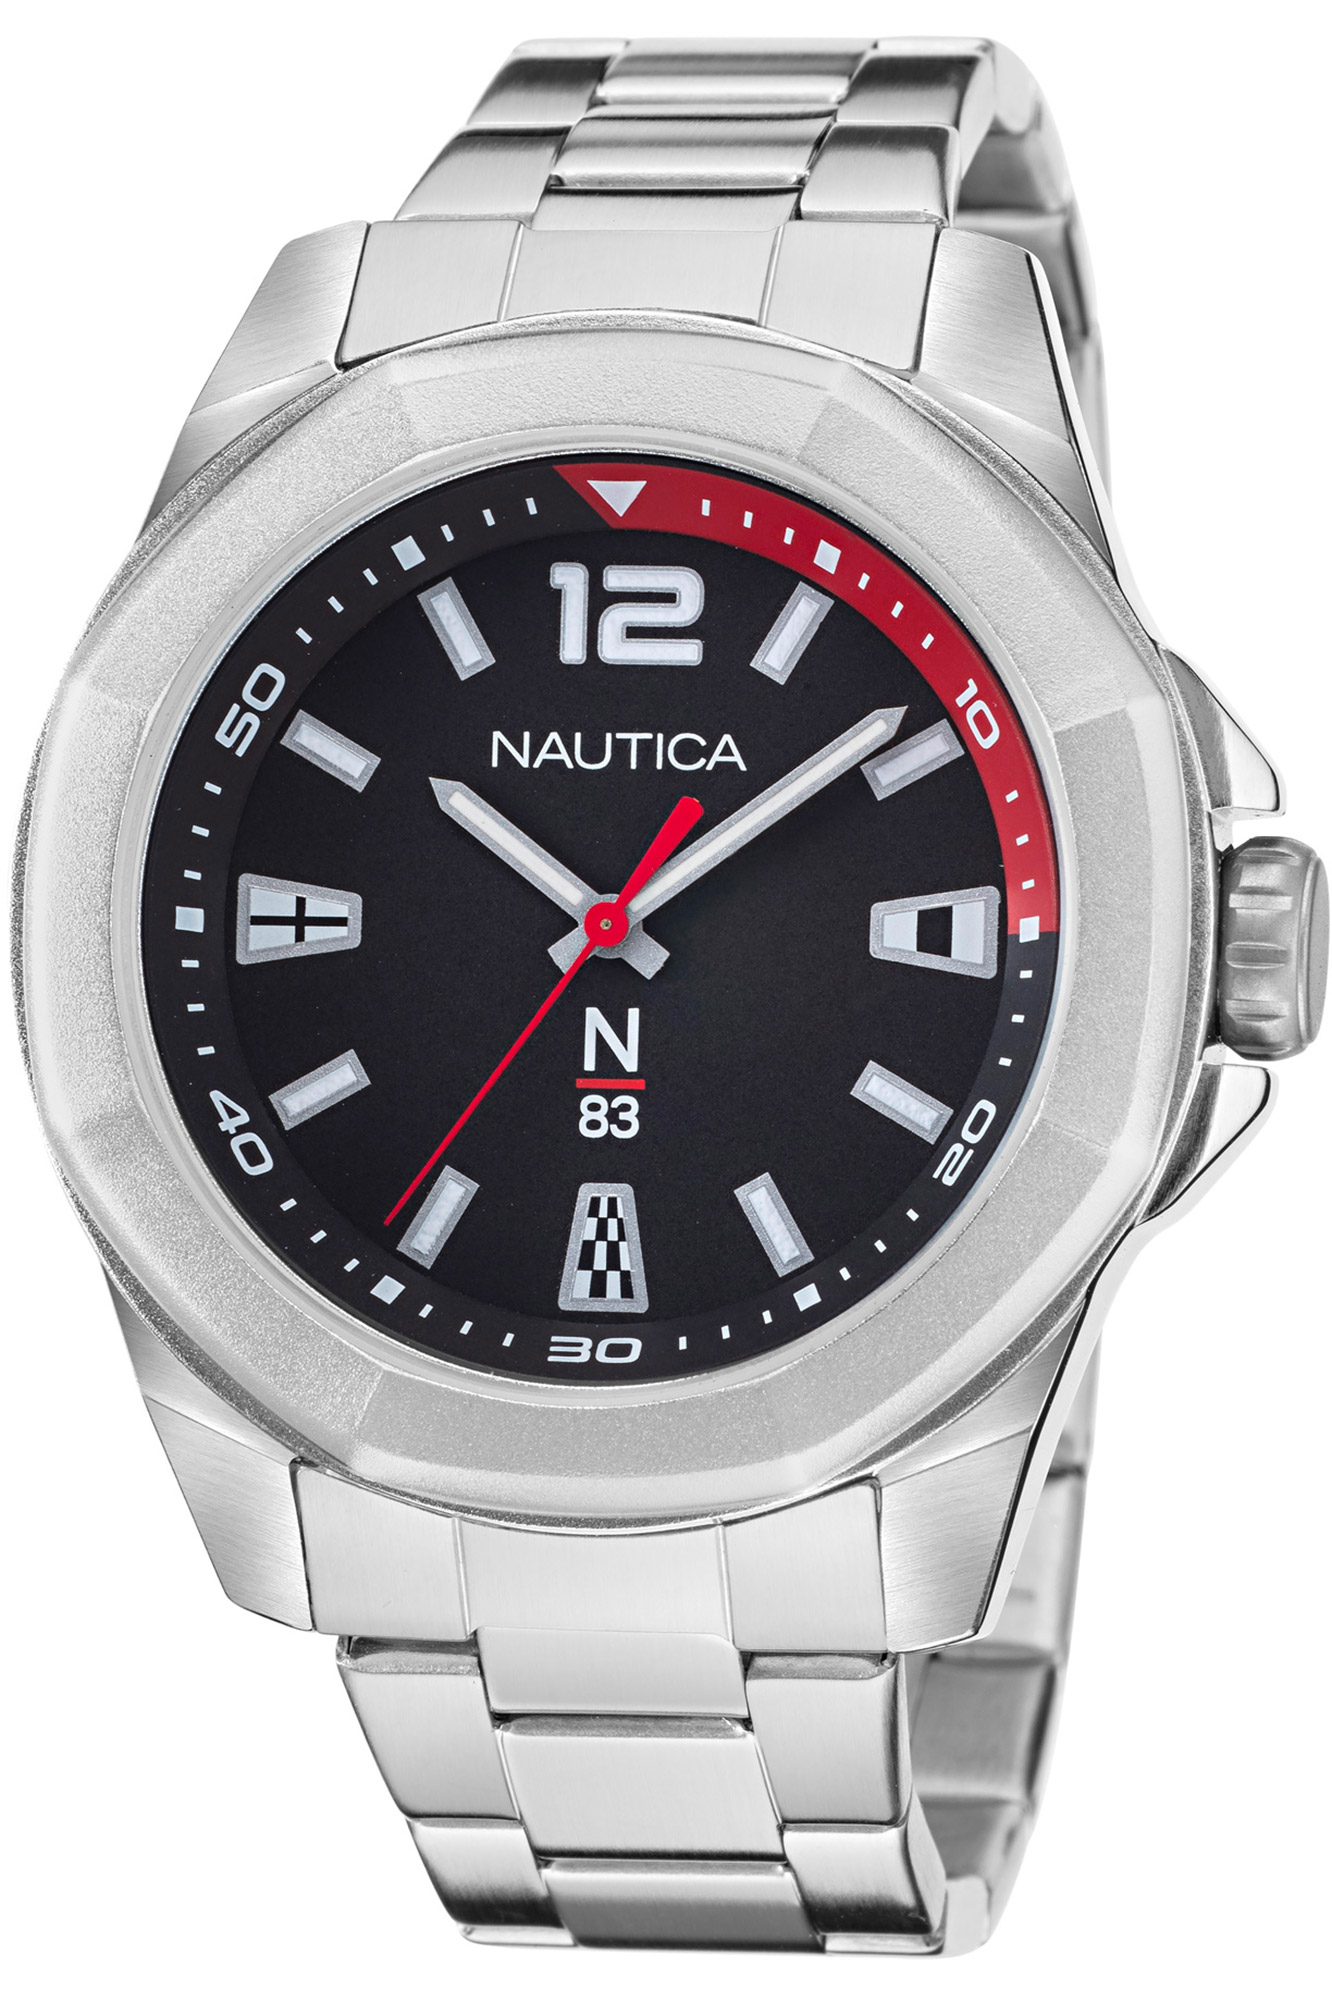 Watch Nautica naptbf104